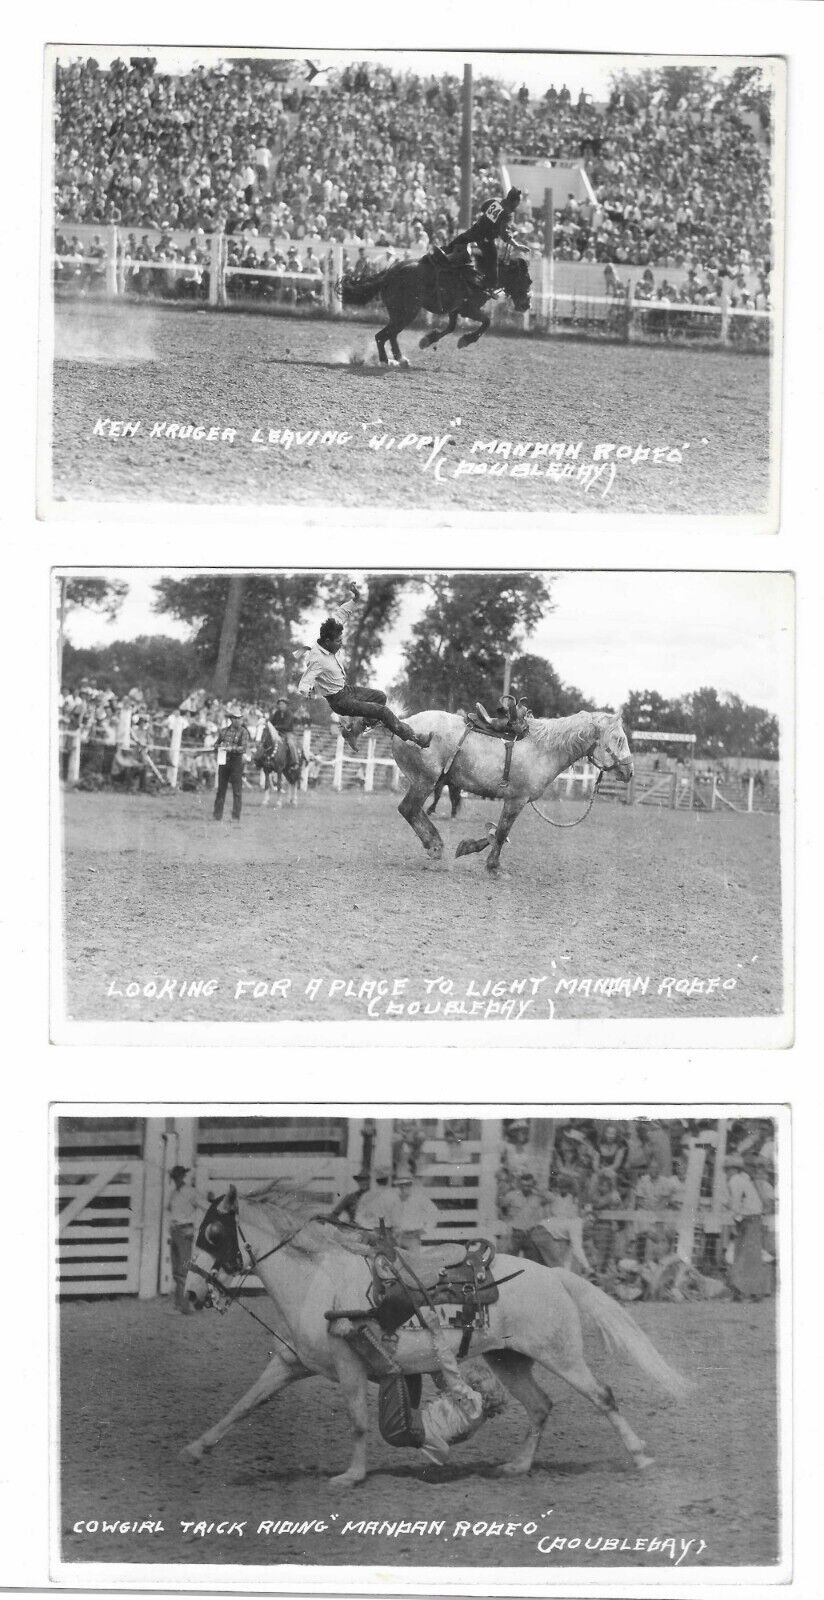 Vintage RPPC Mandan Rodeo Doubleday Broncos Trick Riding Postcards